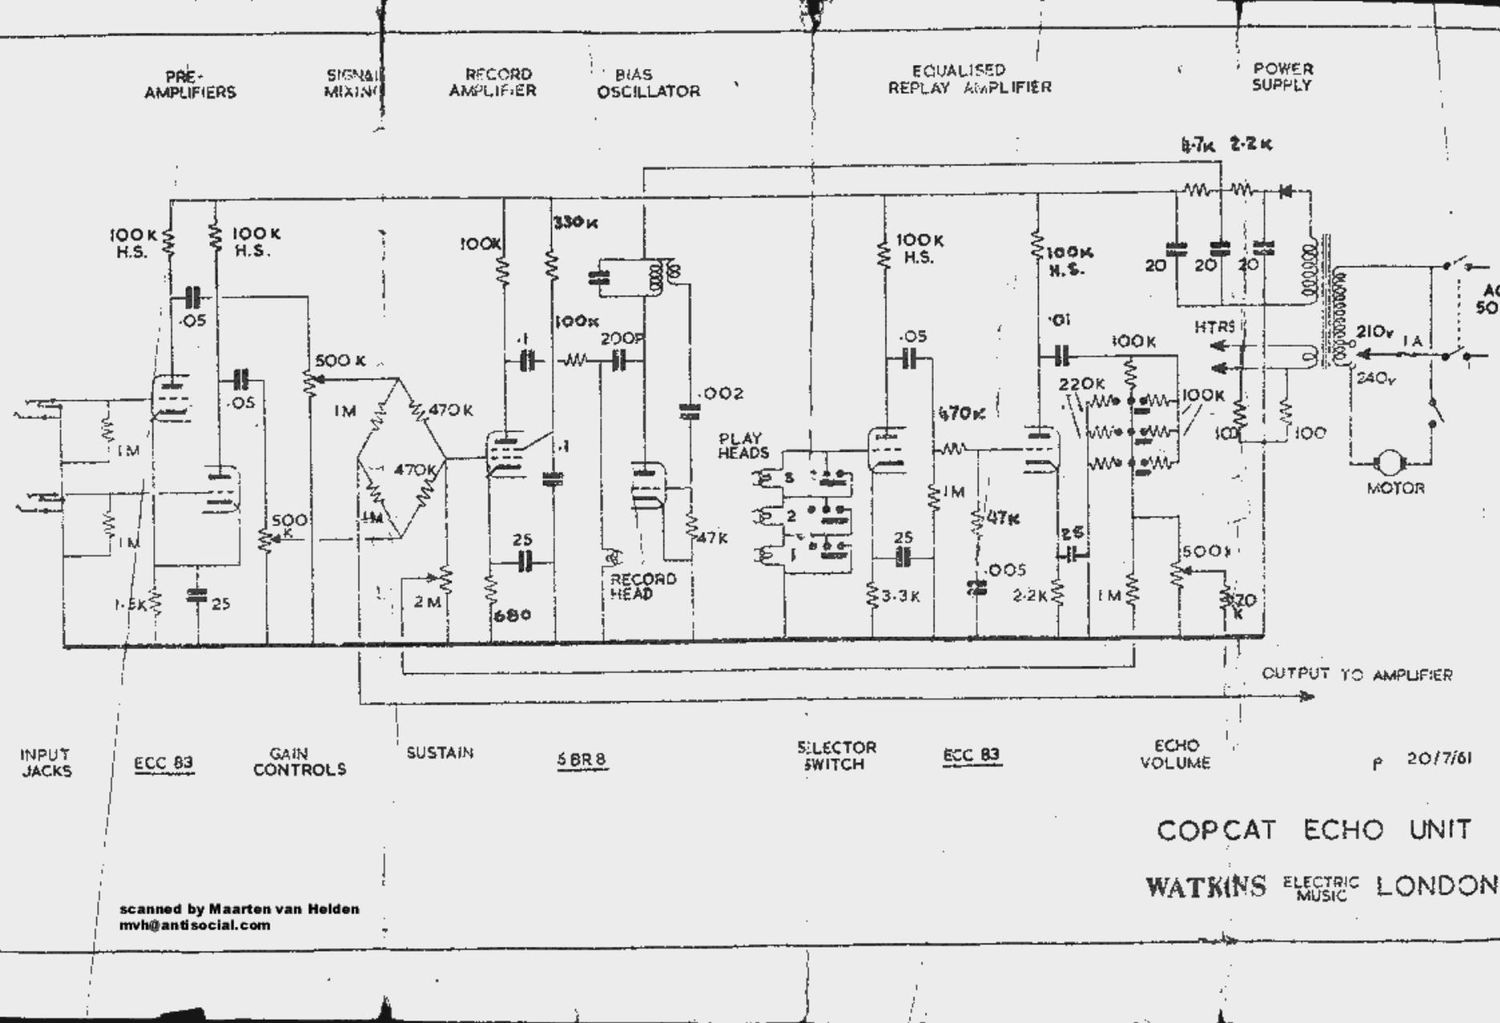 watkins copcat echo unit schematic